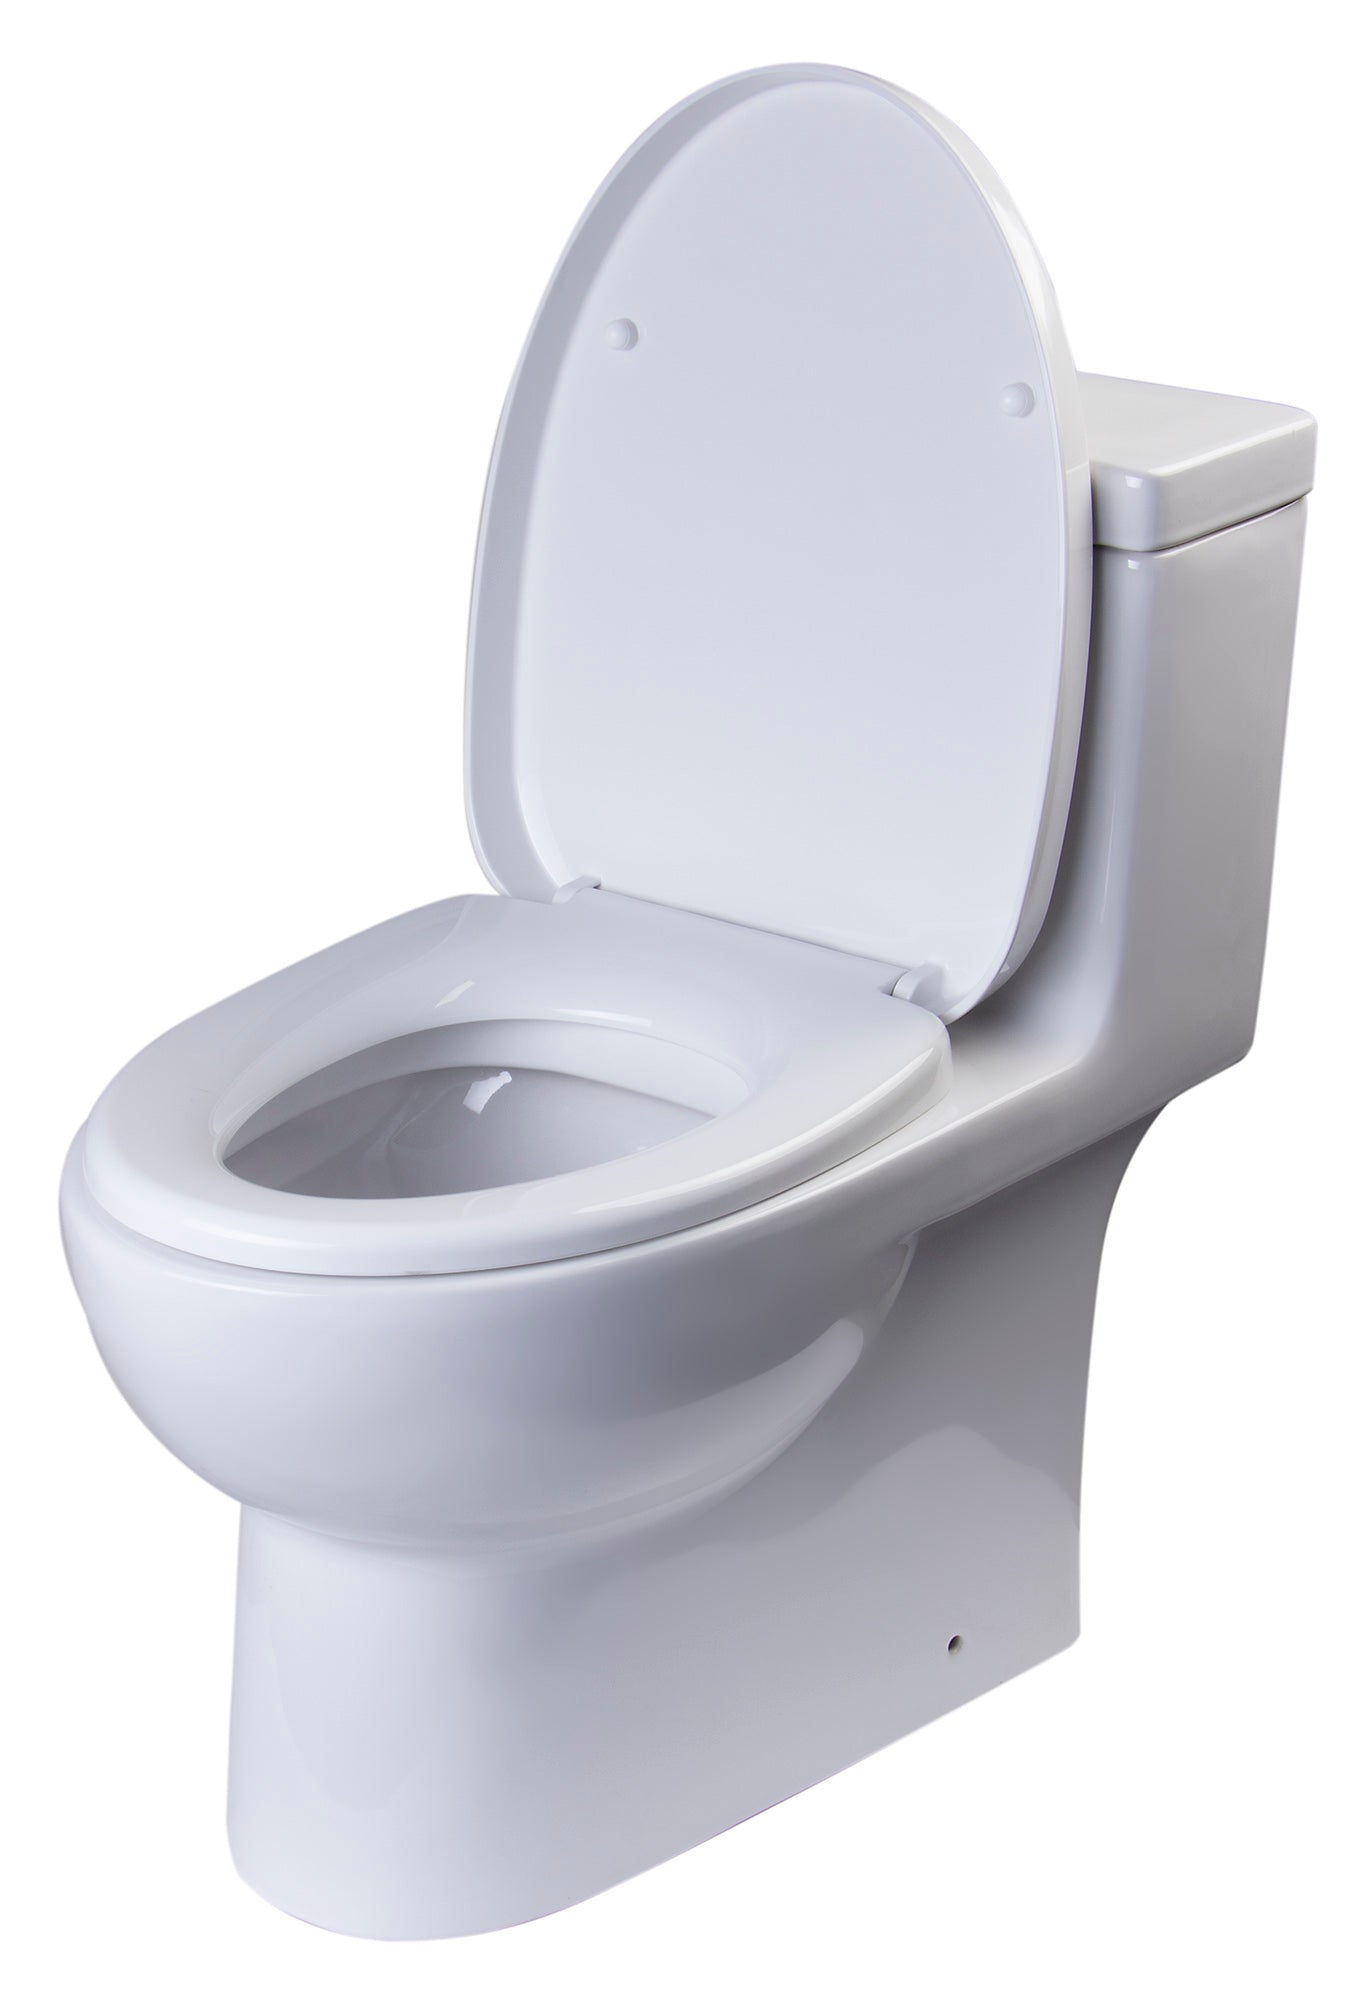 EAGO TB359 Eco-Friendly Toilet Dual-Flush High Efficiency Low Flush White